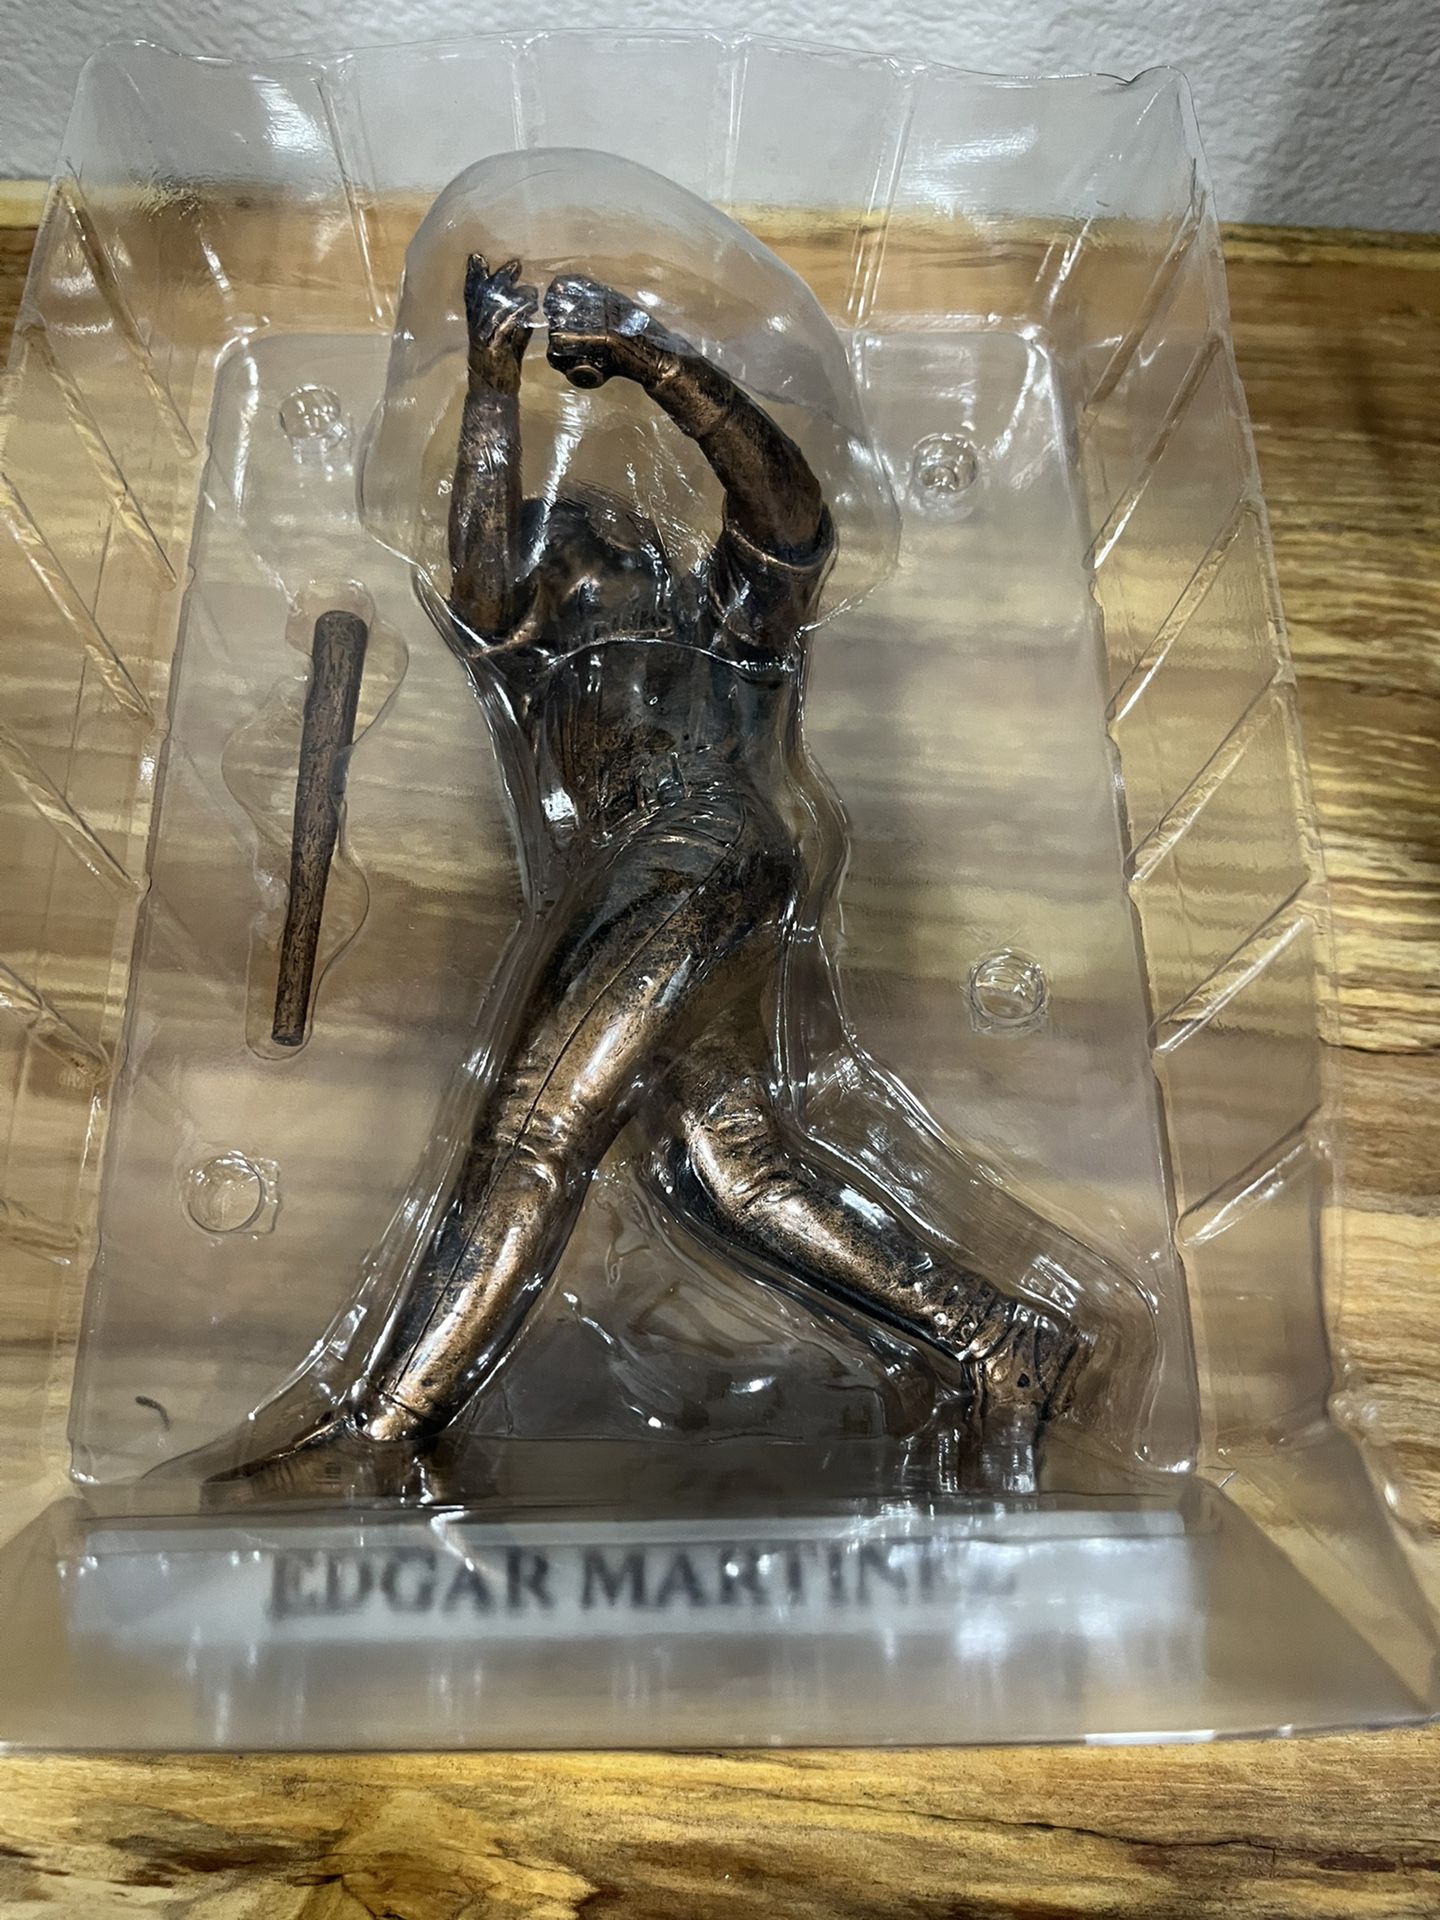 Edgar Martinez Replica Statue for Sale in Orting, WA - OfferUp